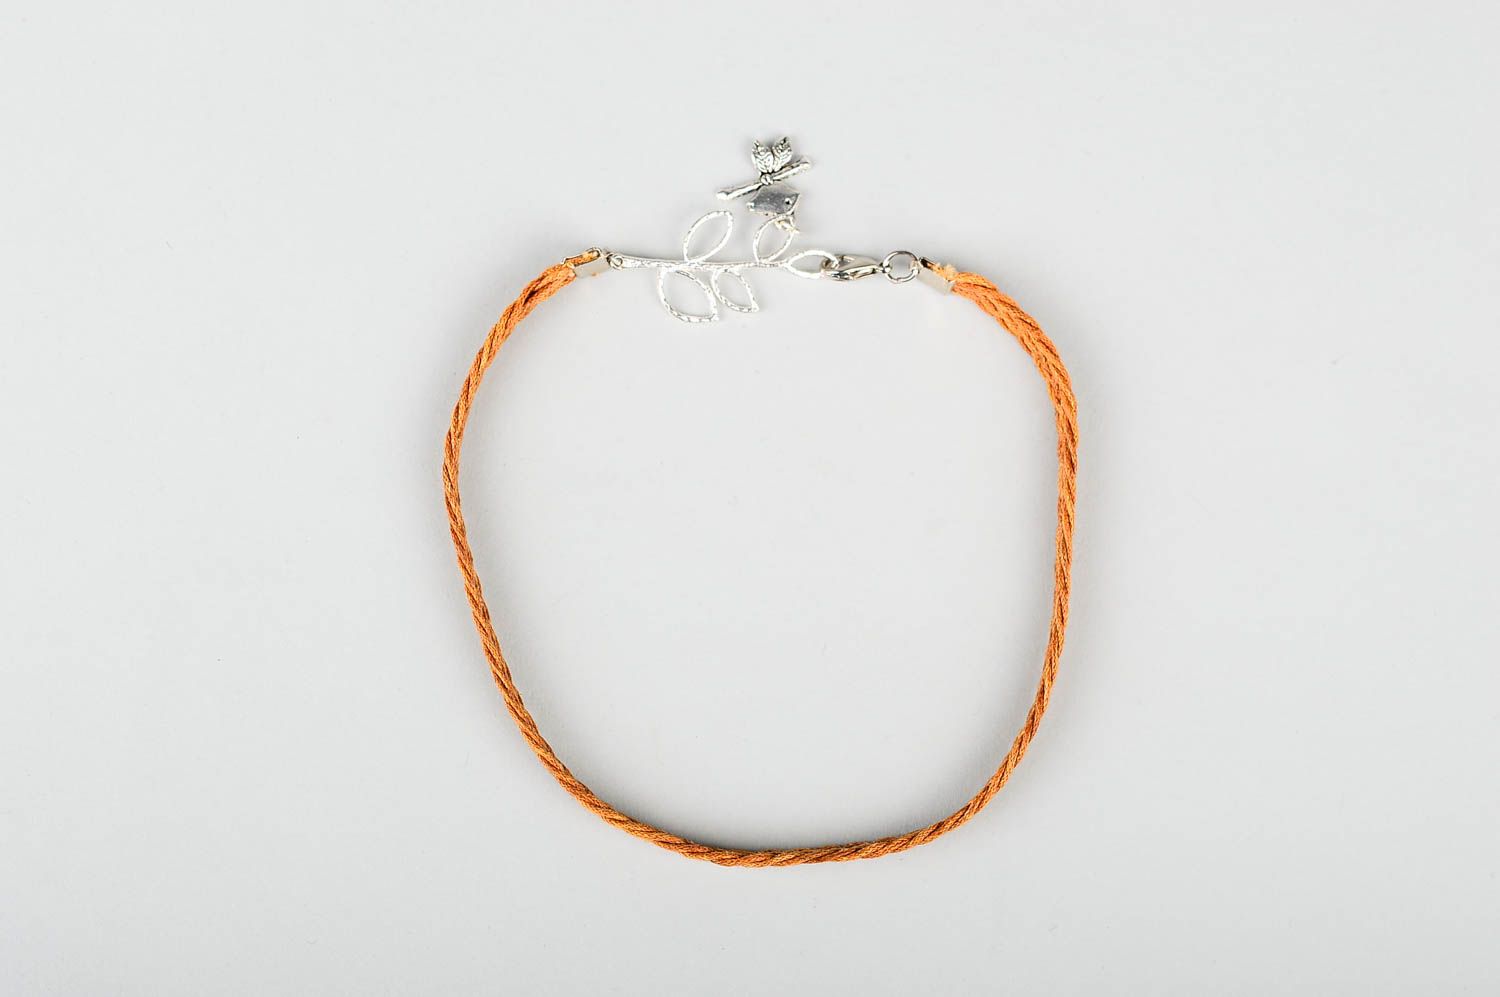 Stylish handmade leather bracelet double wrap bracelet designs gifts for her photo 3